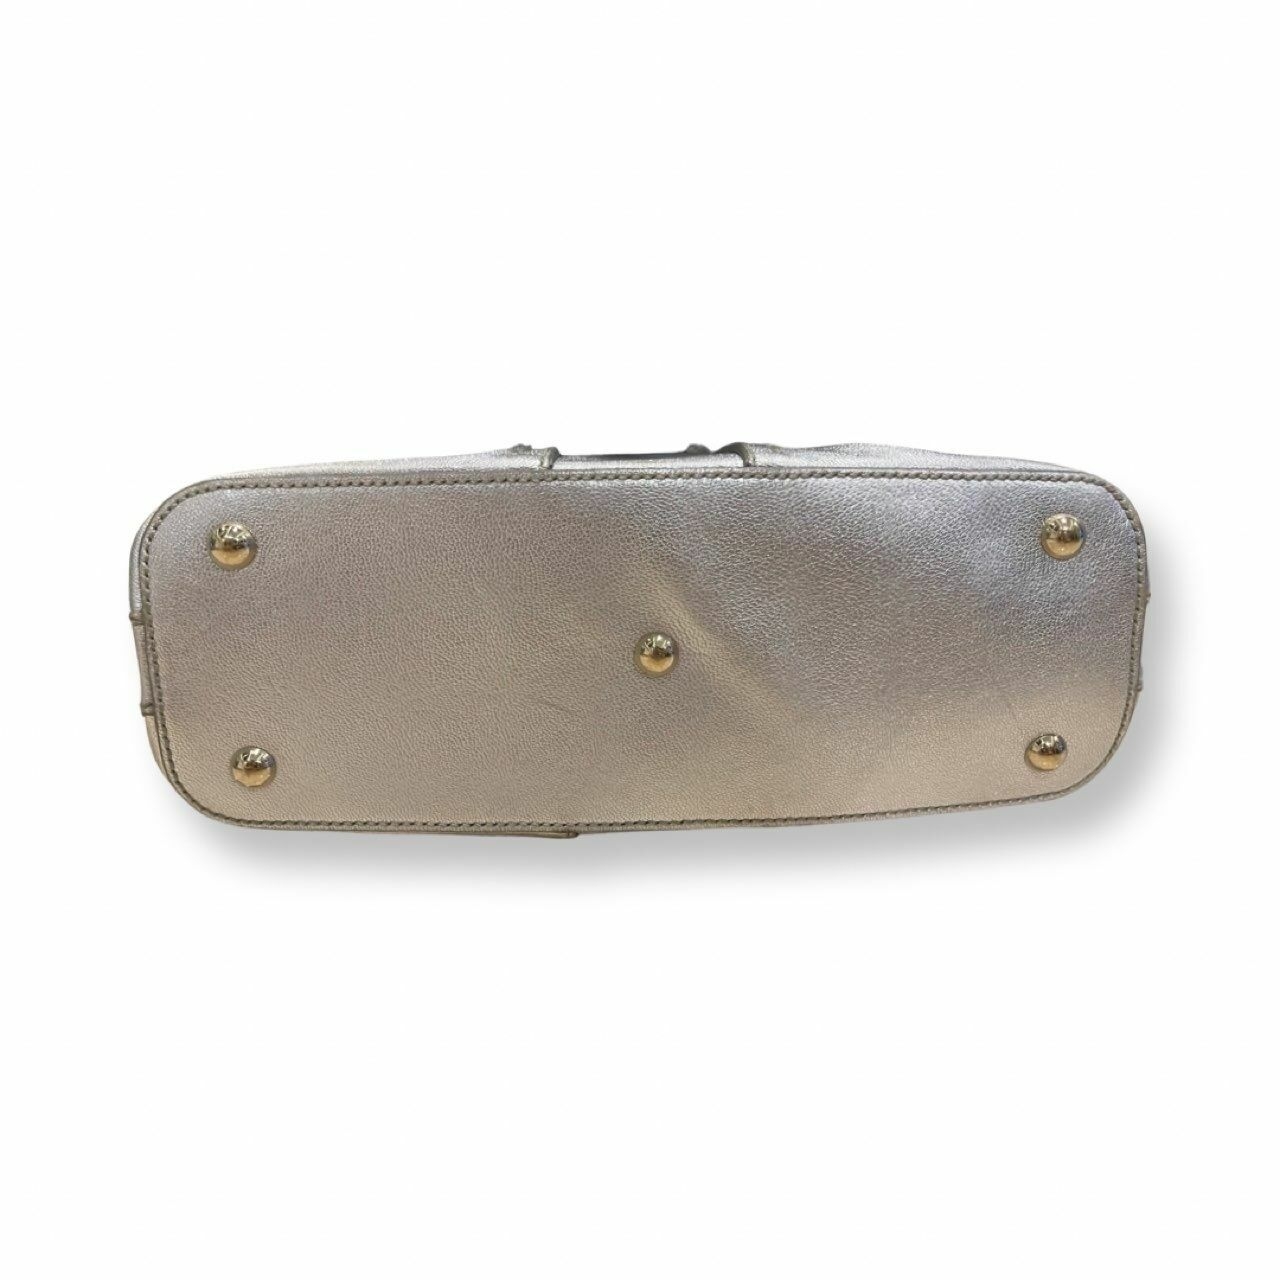 Yves Saint Laurent Leather Muse Metallic Silver Handbag